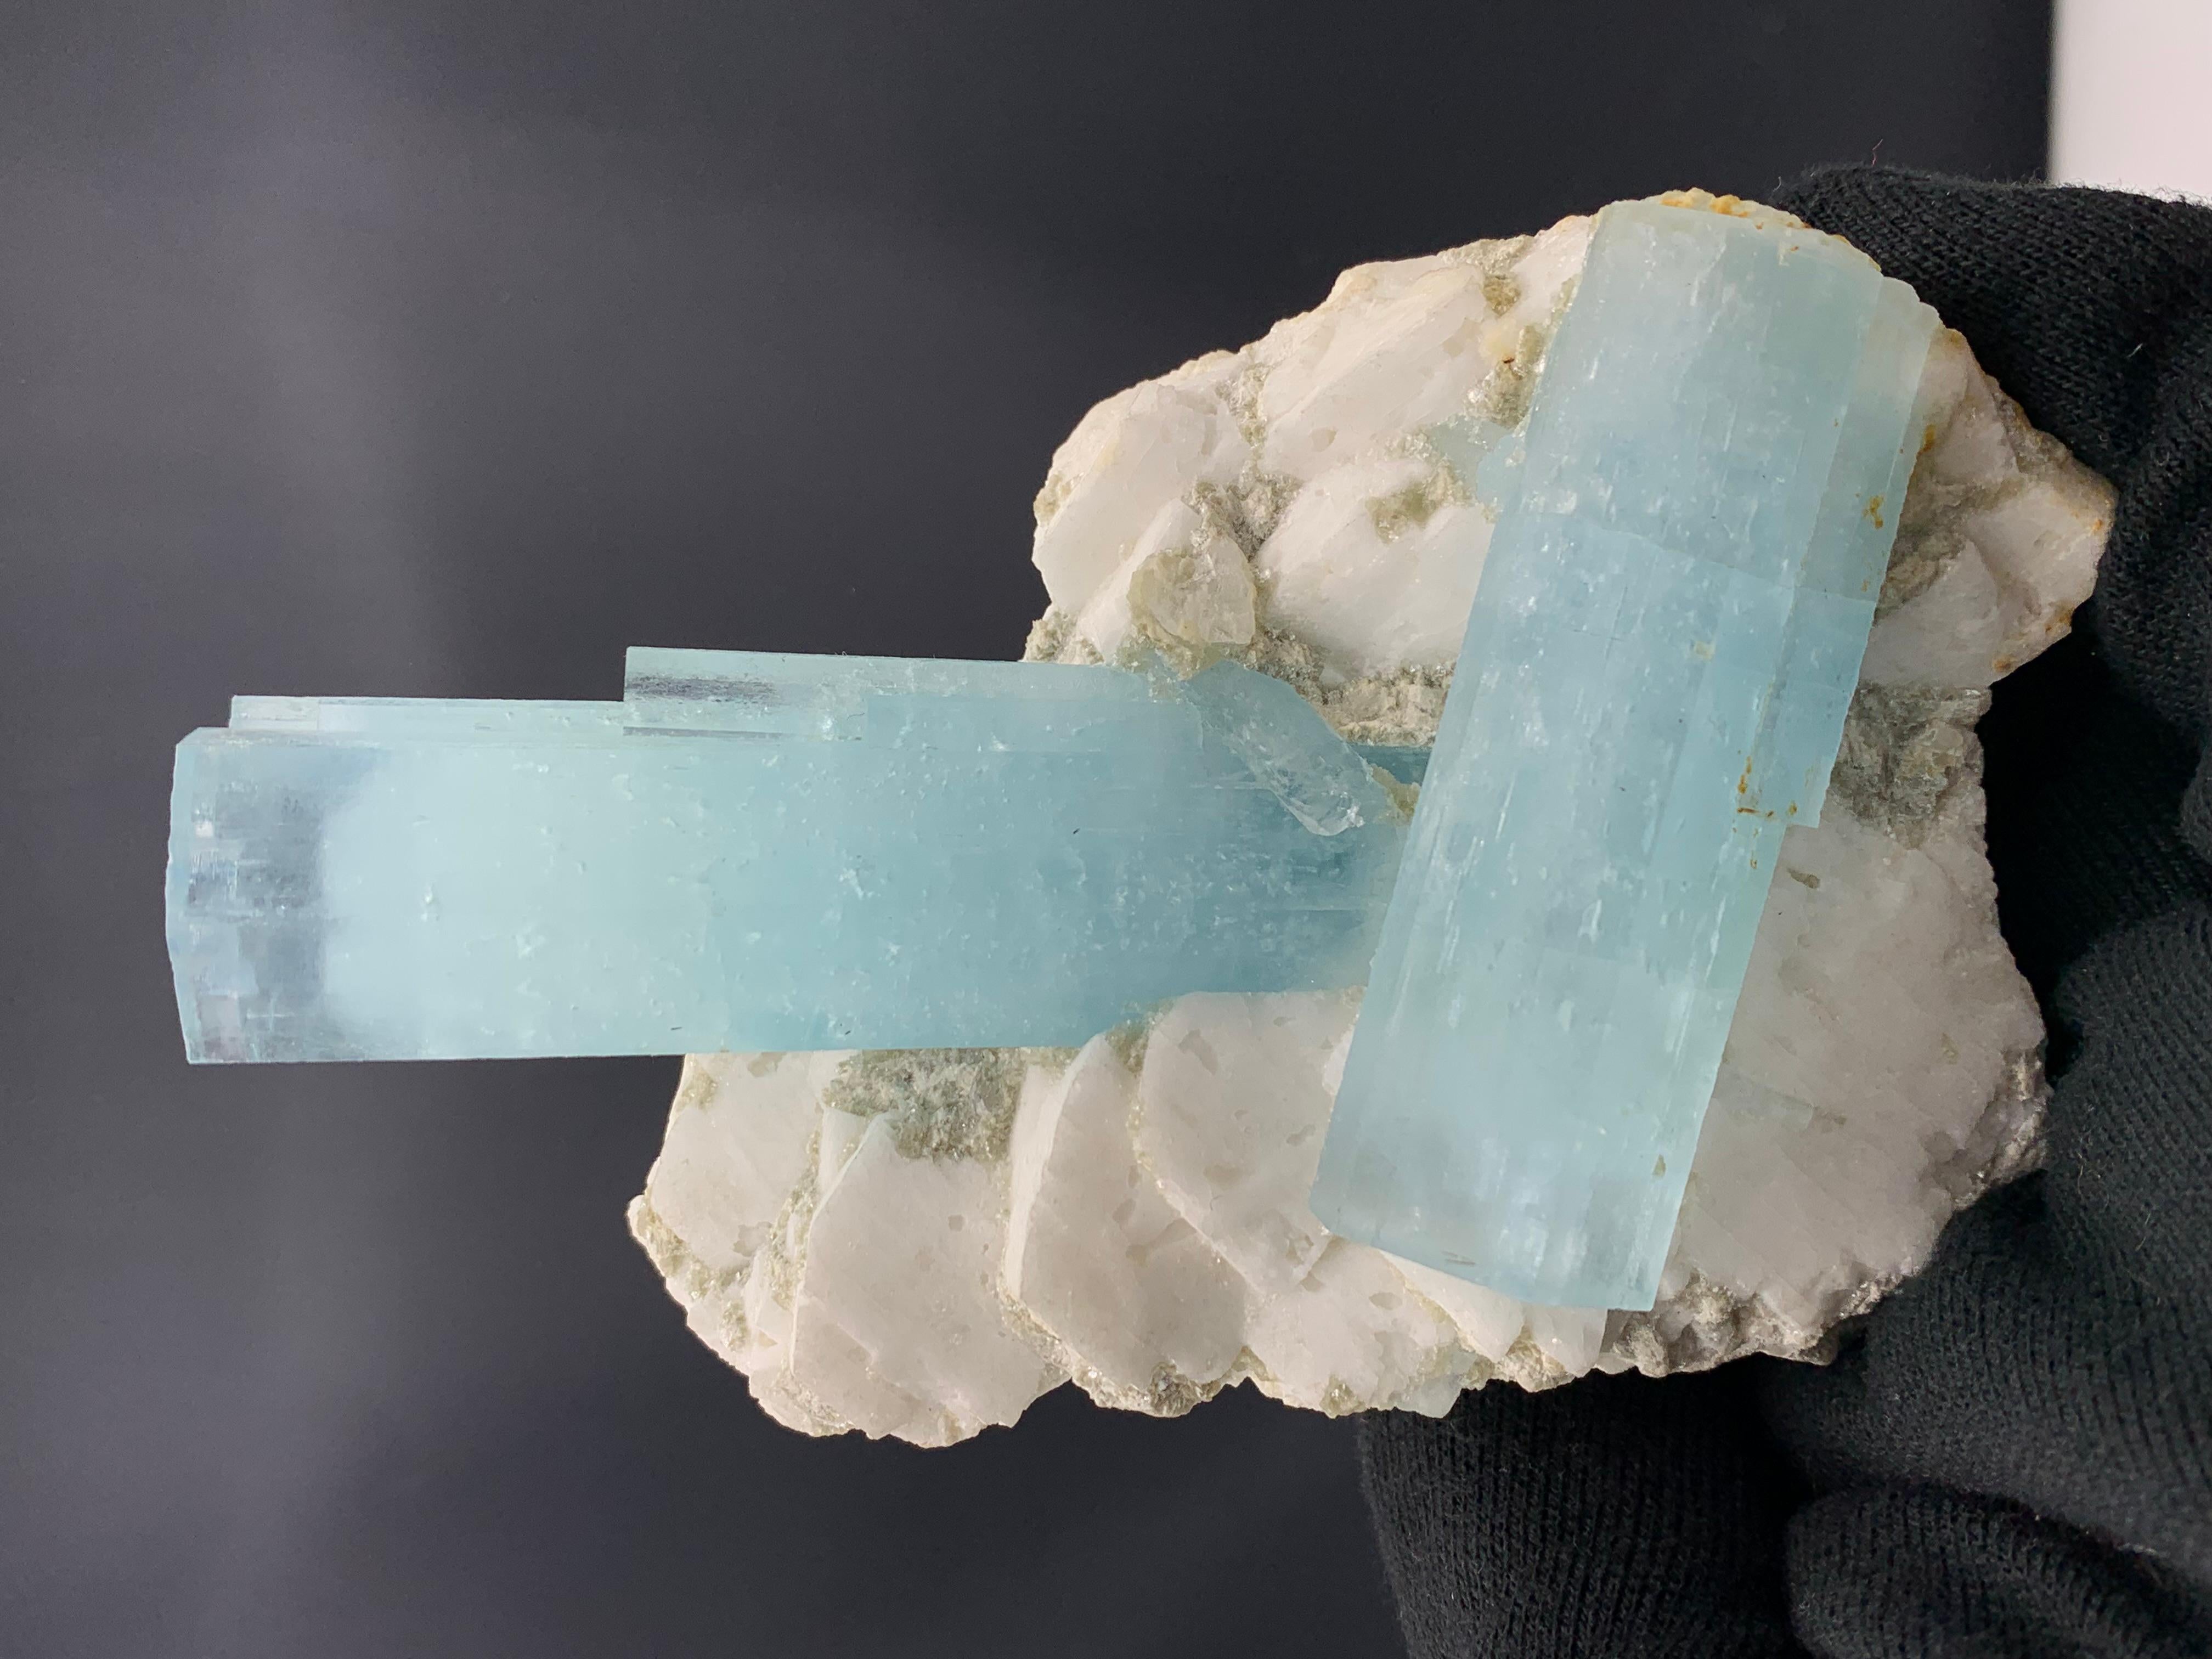 Pakistani 428.97 Gram Amazing Dual Aquamarine Crystal Attach With Feldspar From Pakistan  For Sale